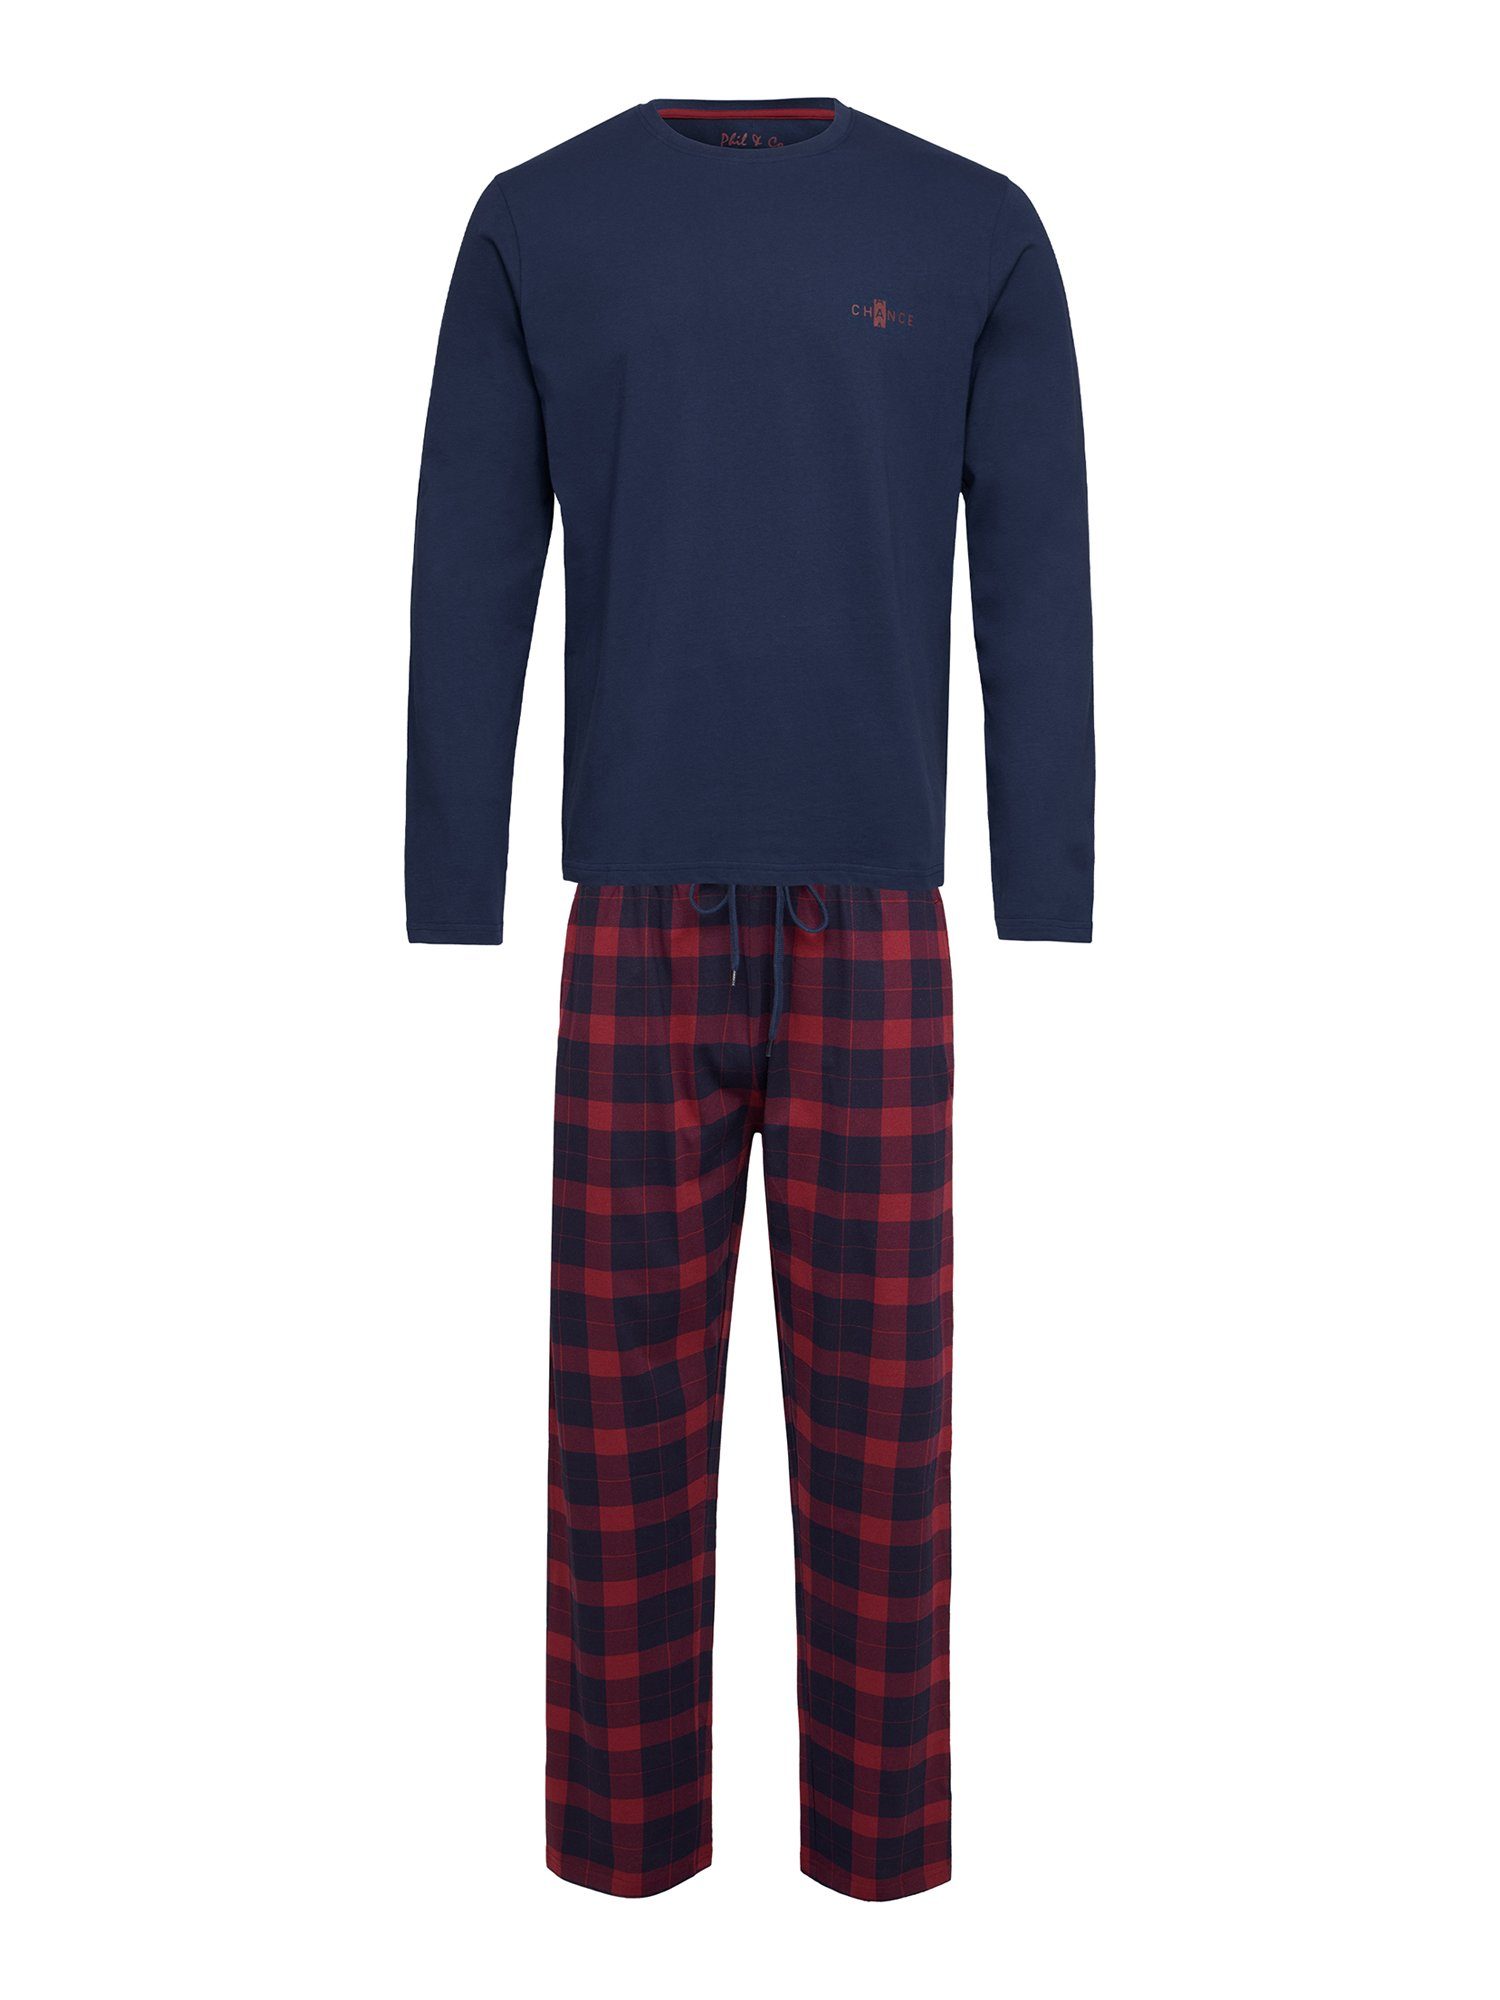 Phil & Co. Pyjama Special (2 tlg) schlafanzug schlafmode bequem blau-rot